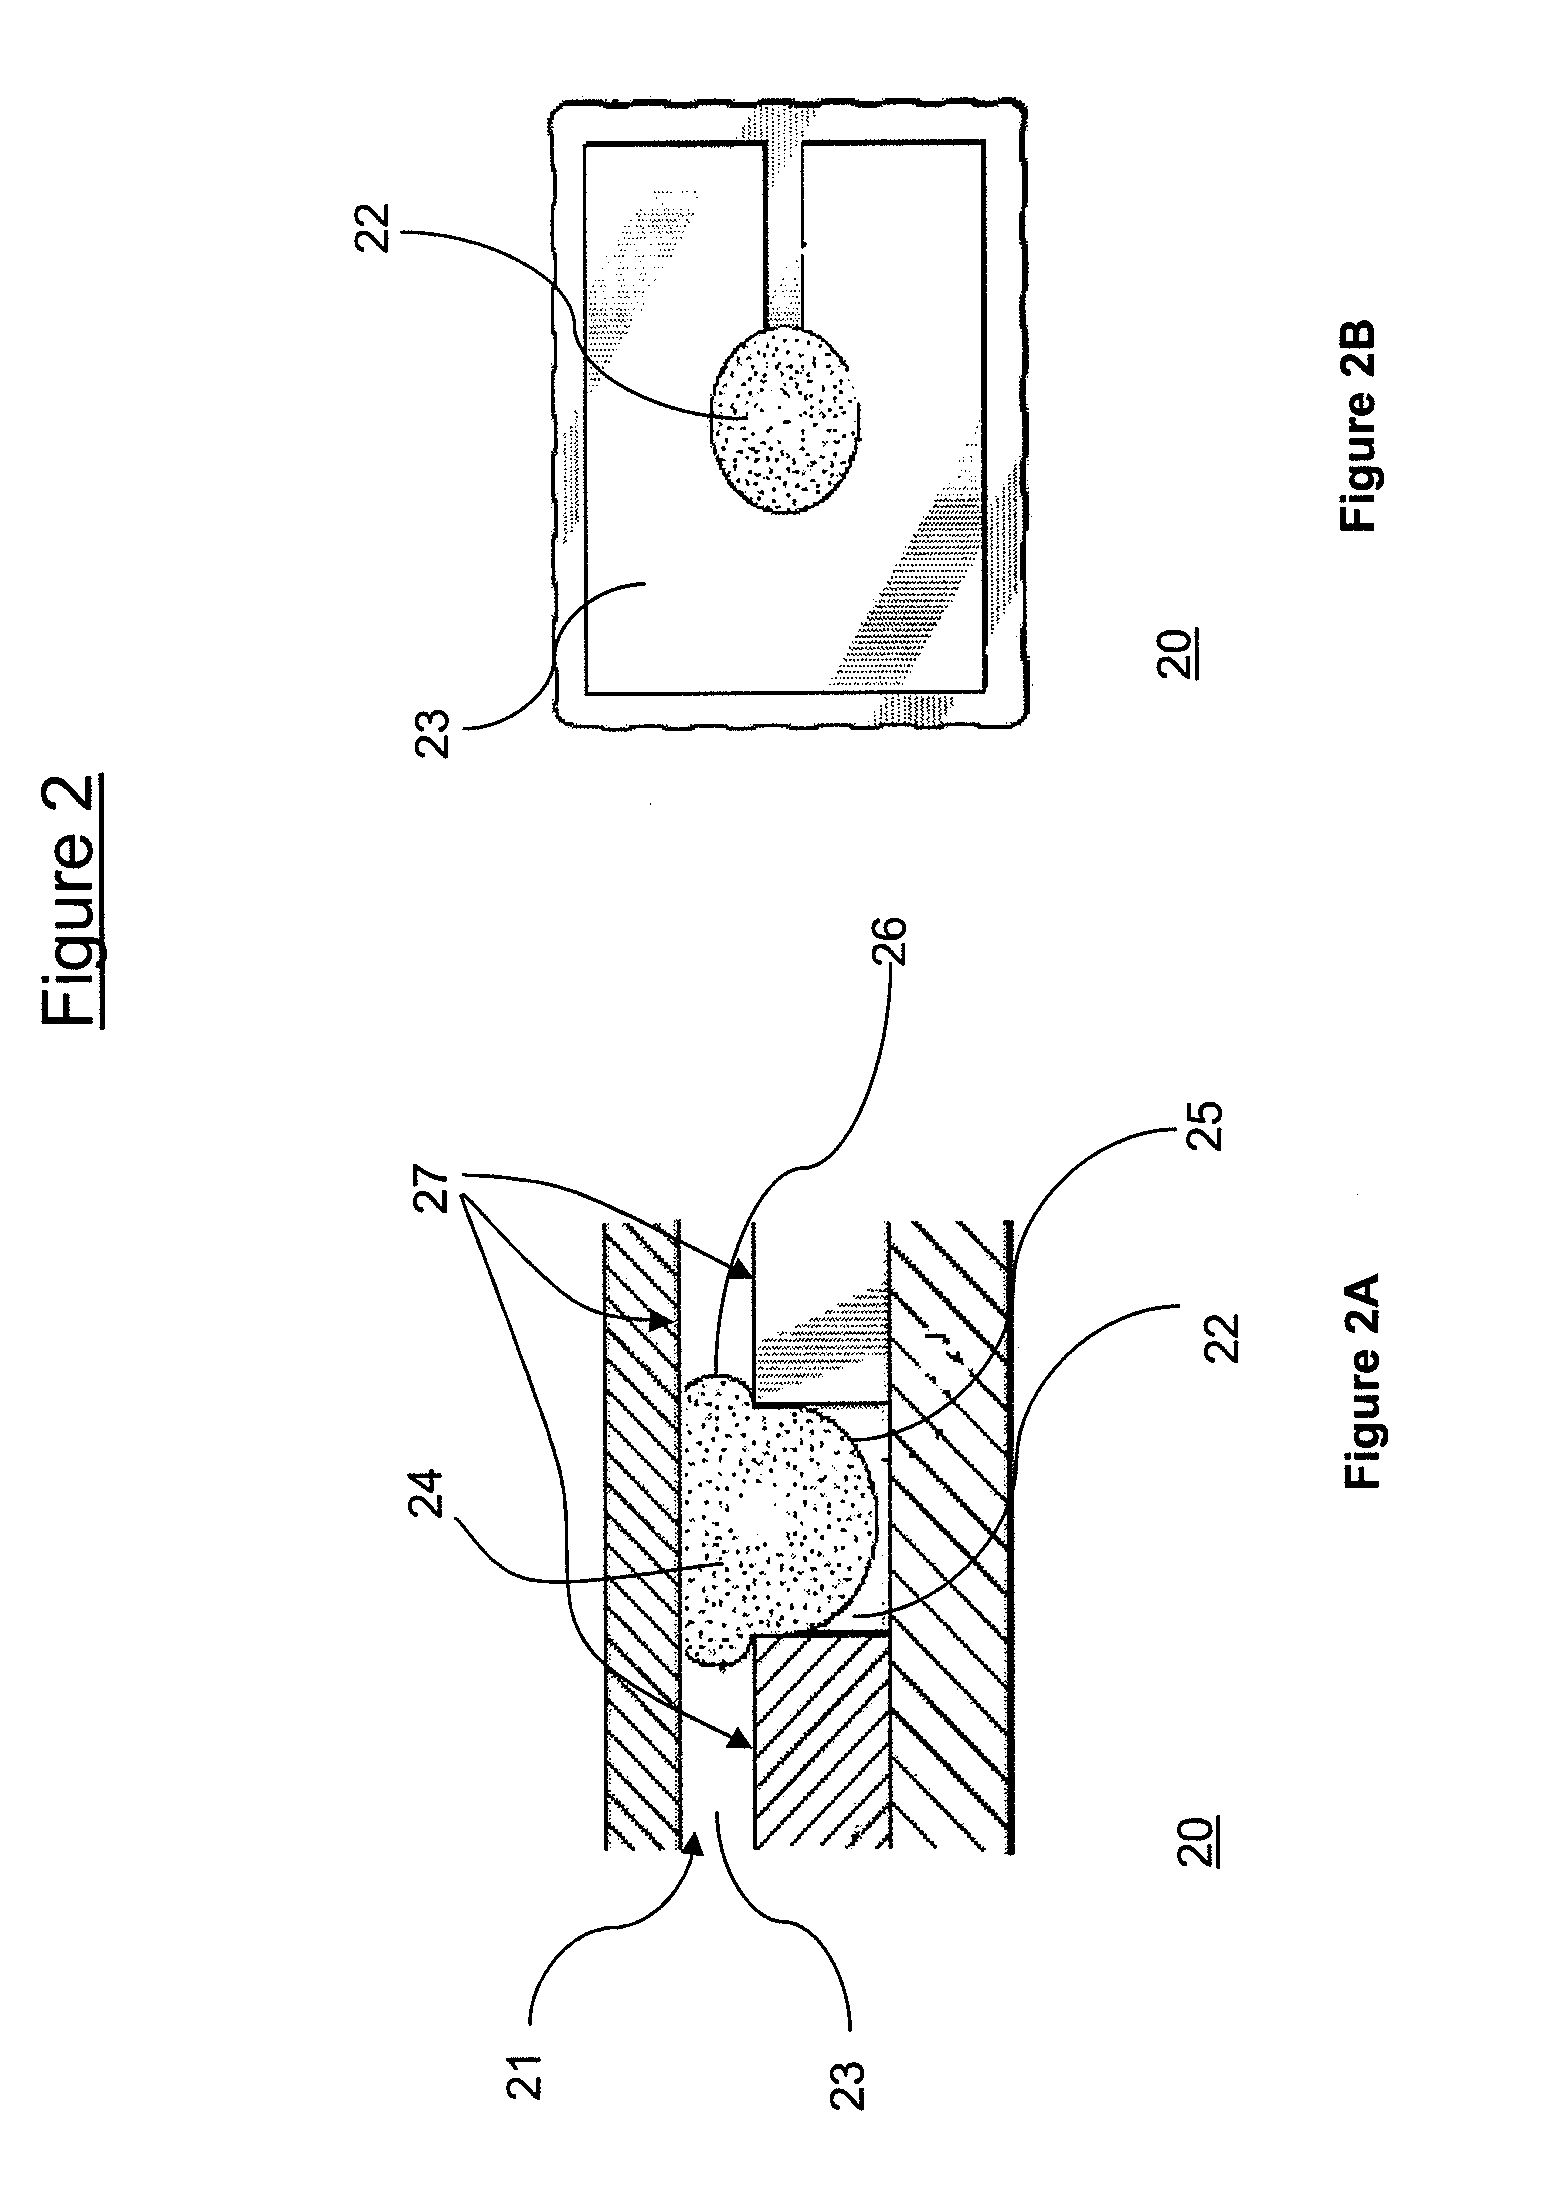 Display apparatus comprising electrofluidic cells